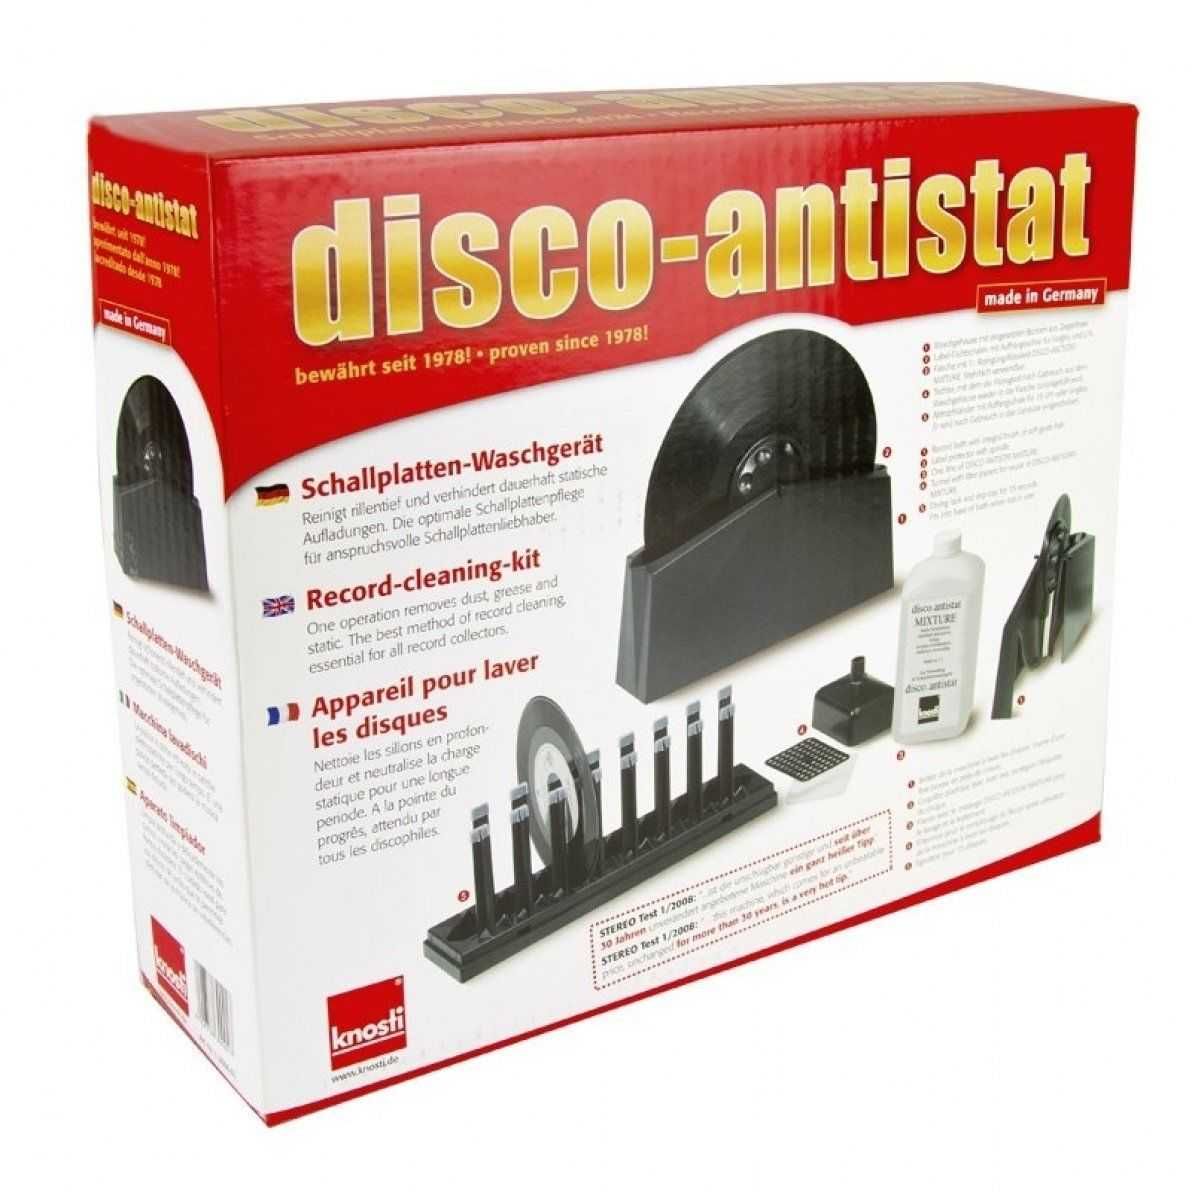 Моечные машинки пластинок - Knosti Disco-Antistat - Germany!